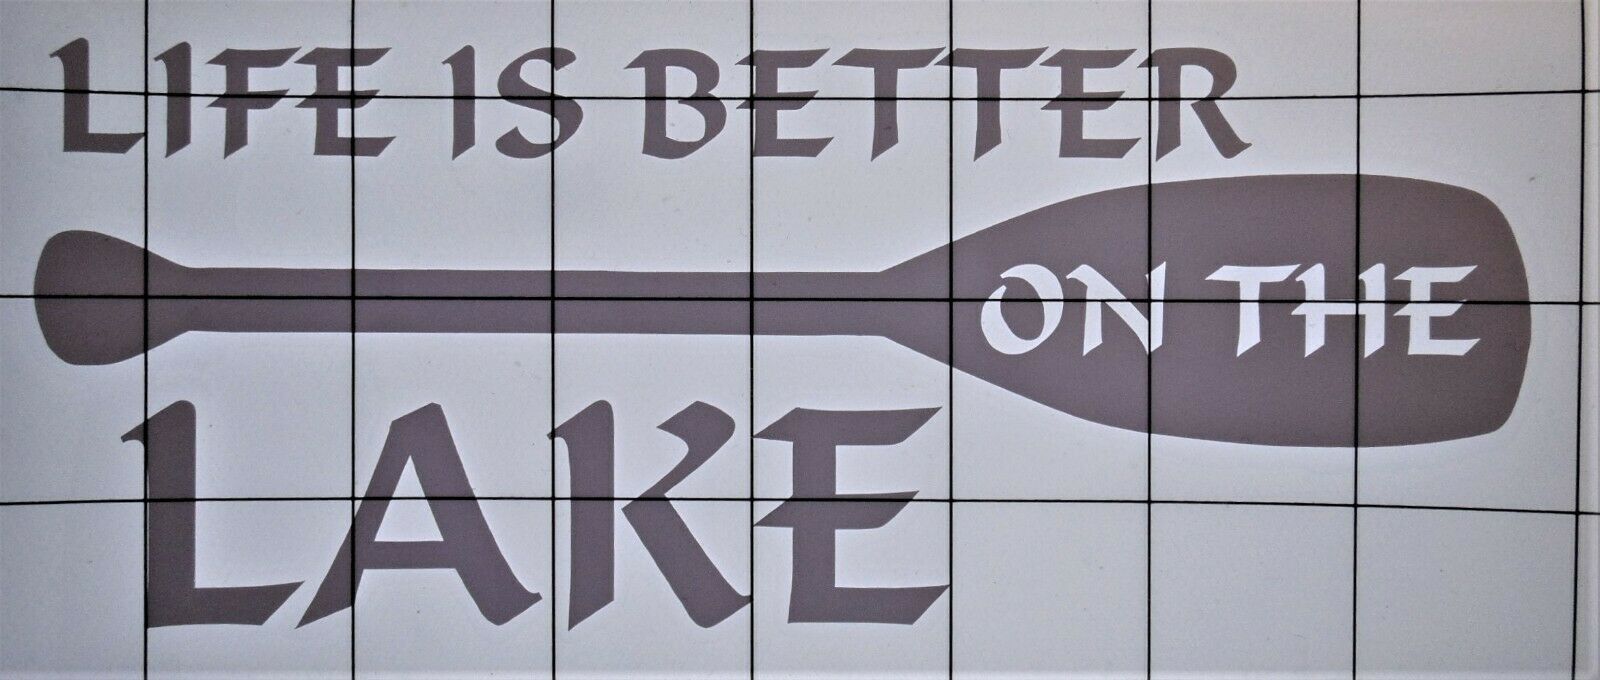 Life Is Better On The Lake Die-Cut Vinyl Indoor Outdoor Car Window Decal Sticker